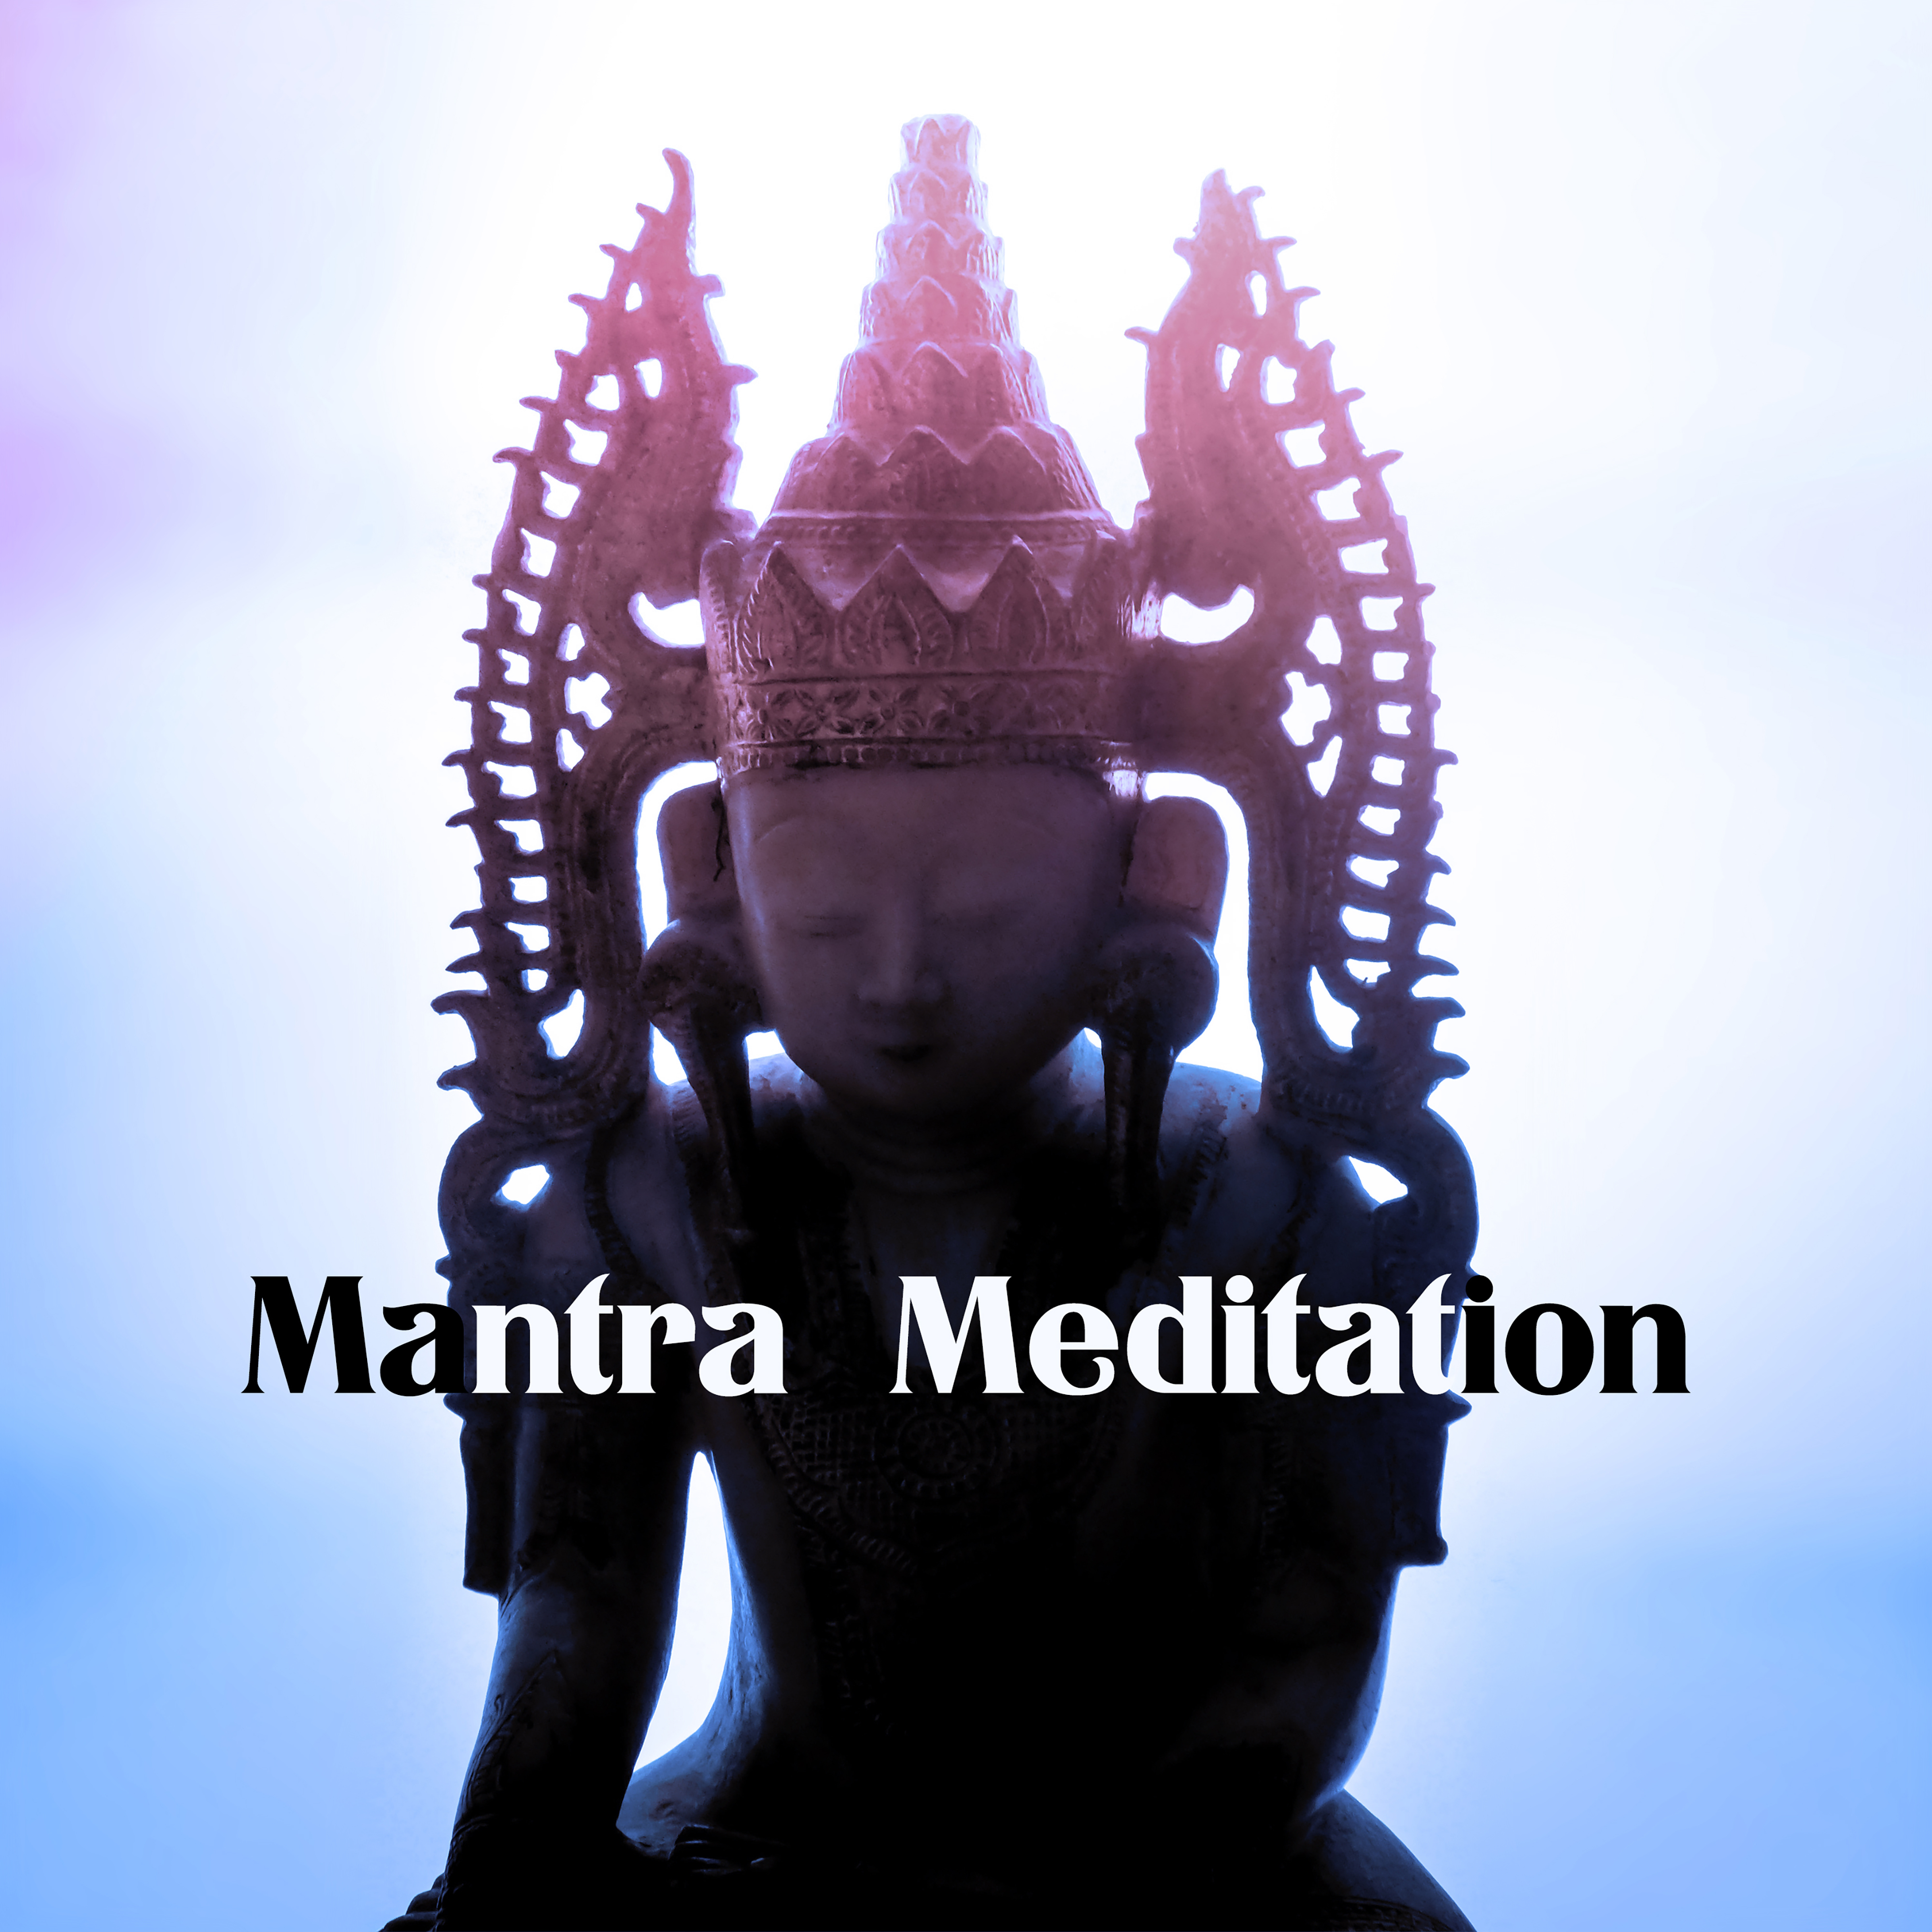 Mantra Meditation  Tibetan Melodies for Mantra, Meditation, Yoga Music, Deep Relaxation